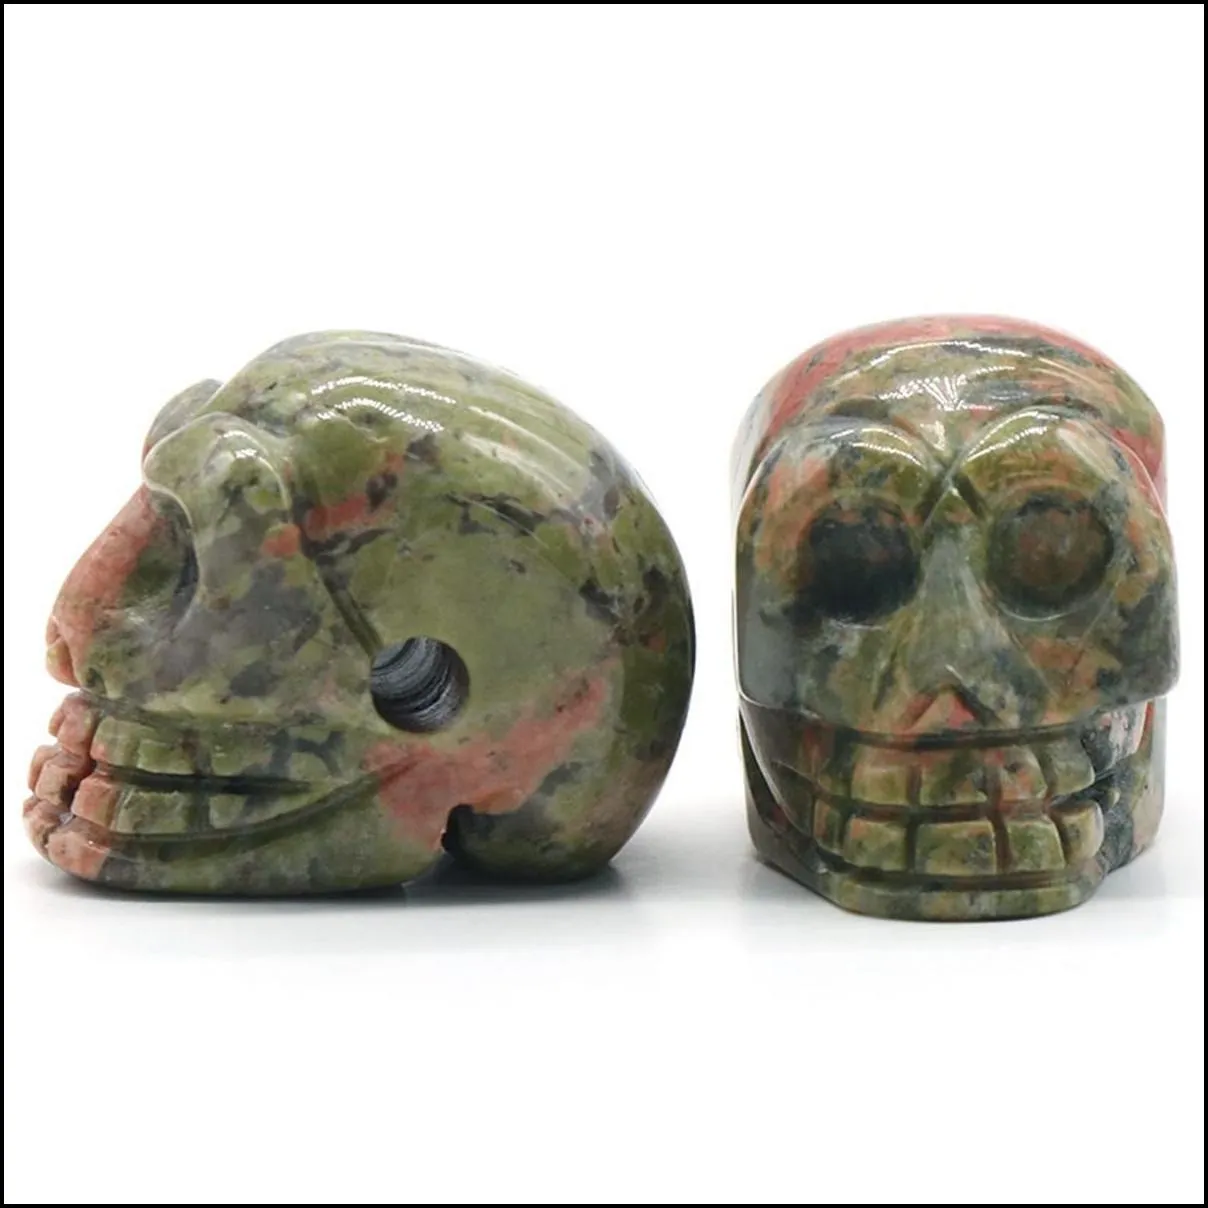 23mm natural sodalite skull figurine reiki healing energy stones ornaments carved statue gemstone home decor halloween gift